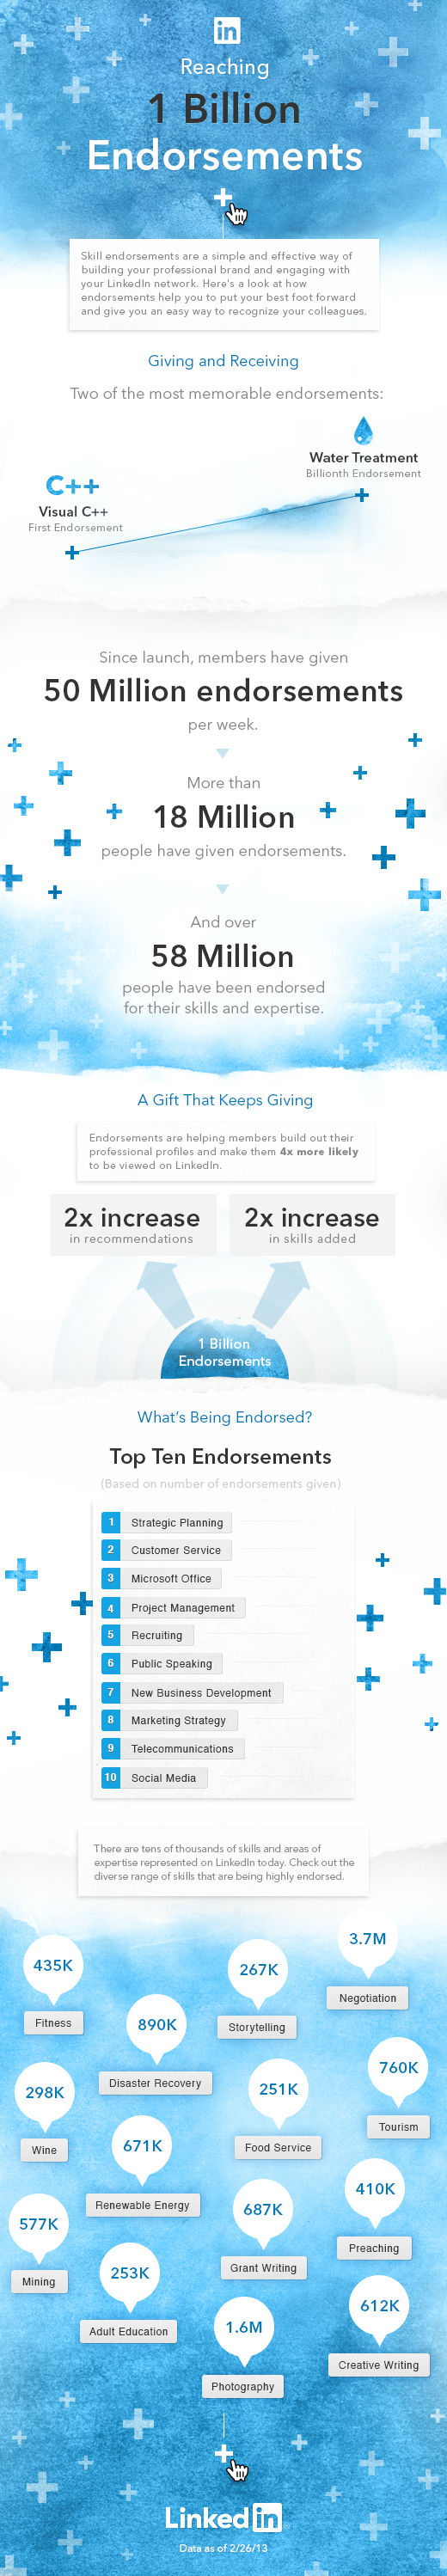 LinkedIn-endorsements